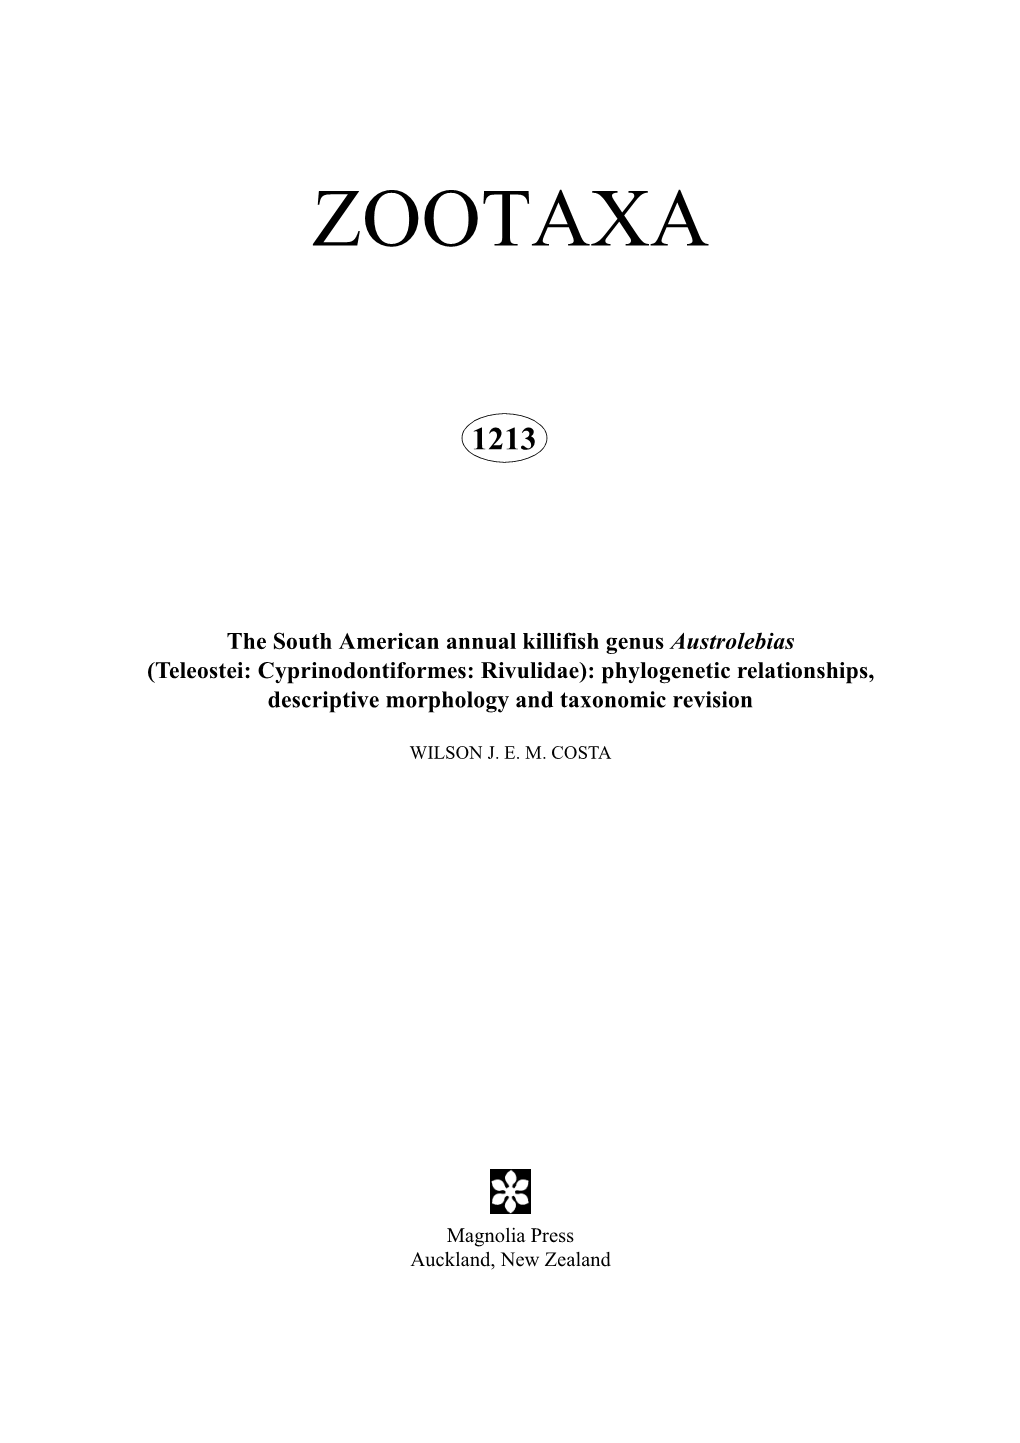 Zootaxa, Annual Killifish Genus Austrolebias (Teleostei